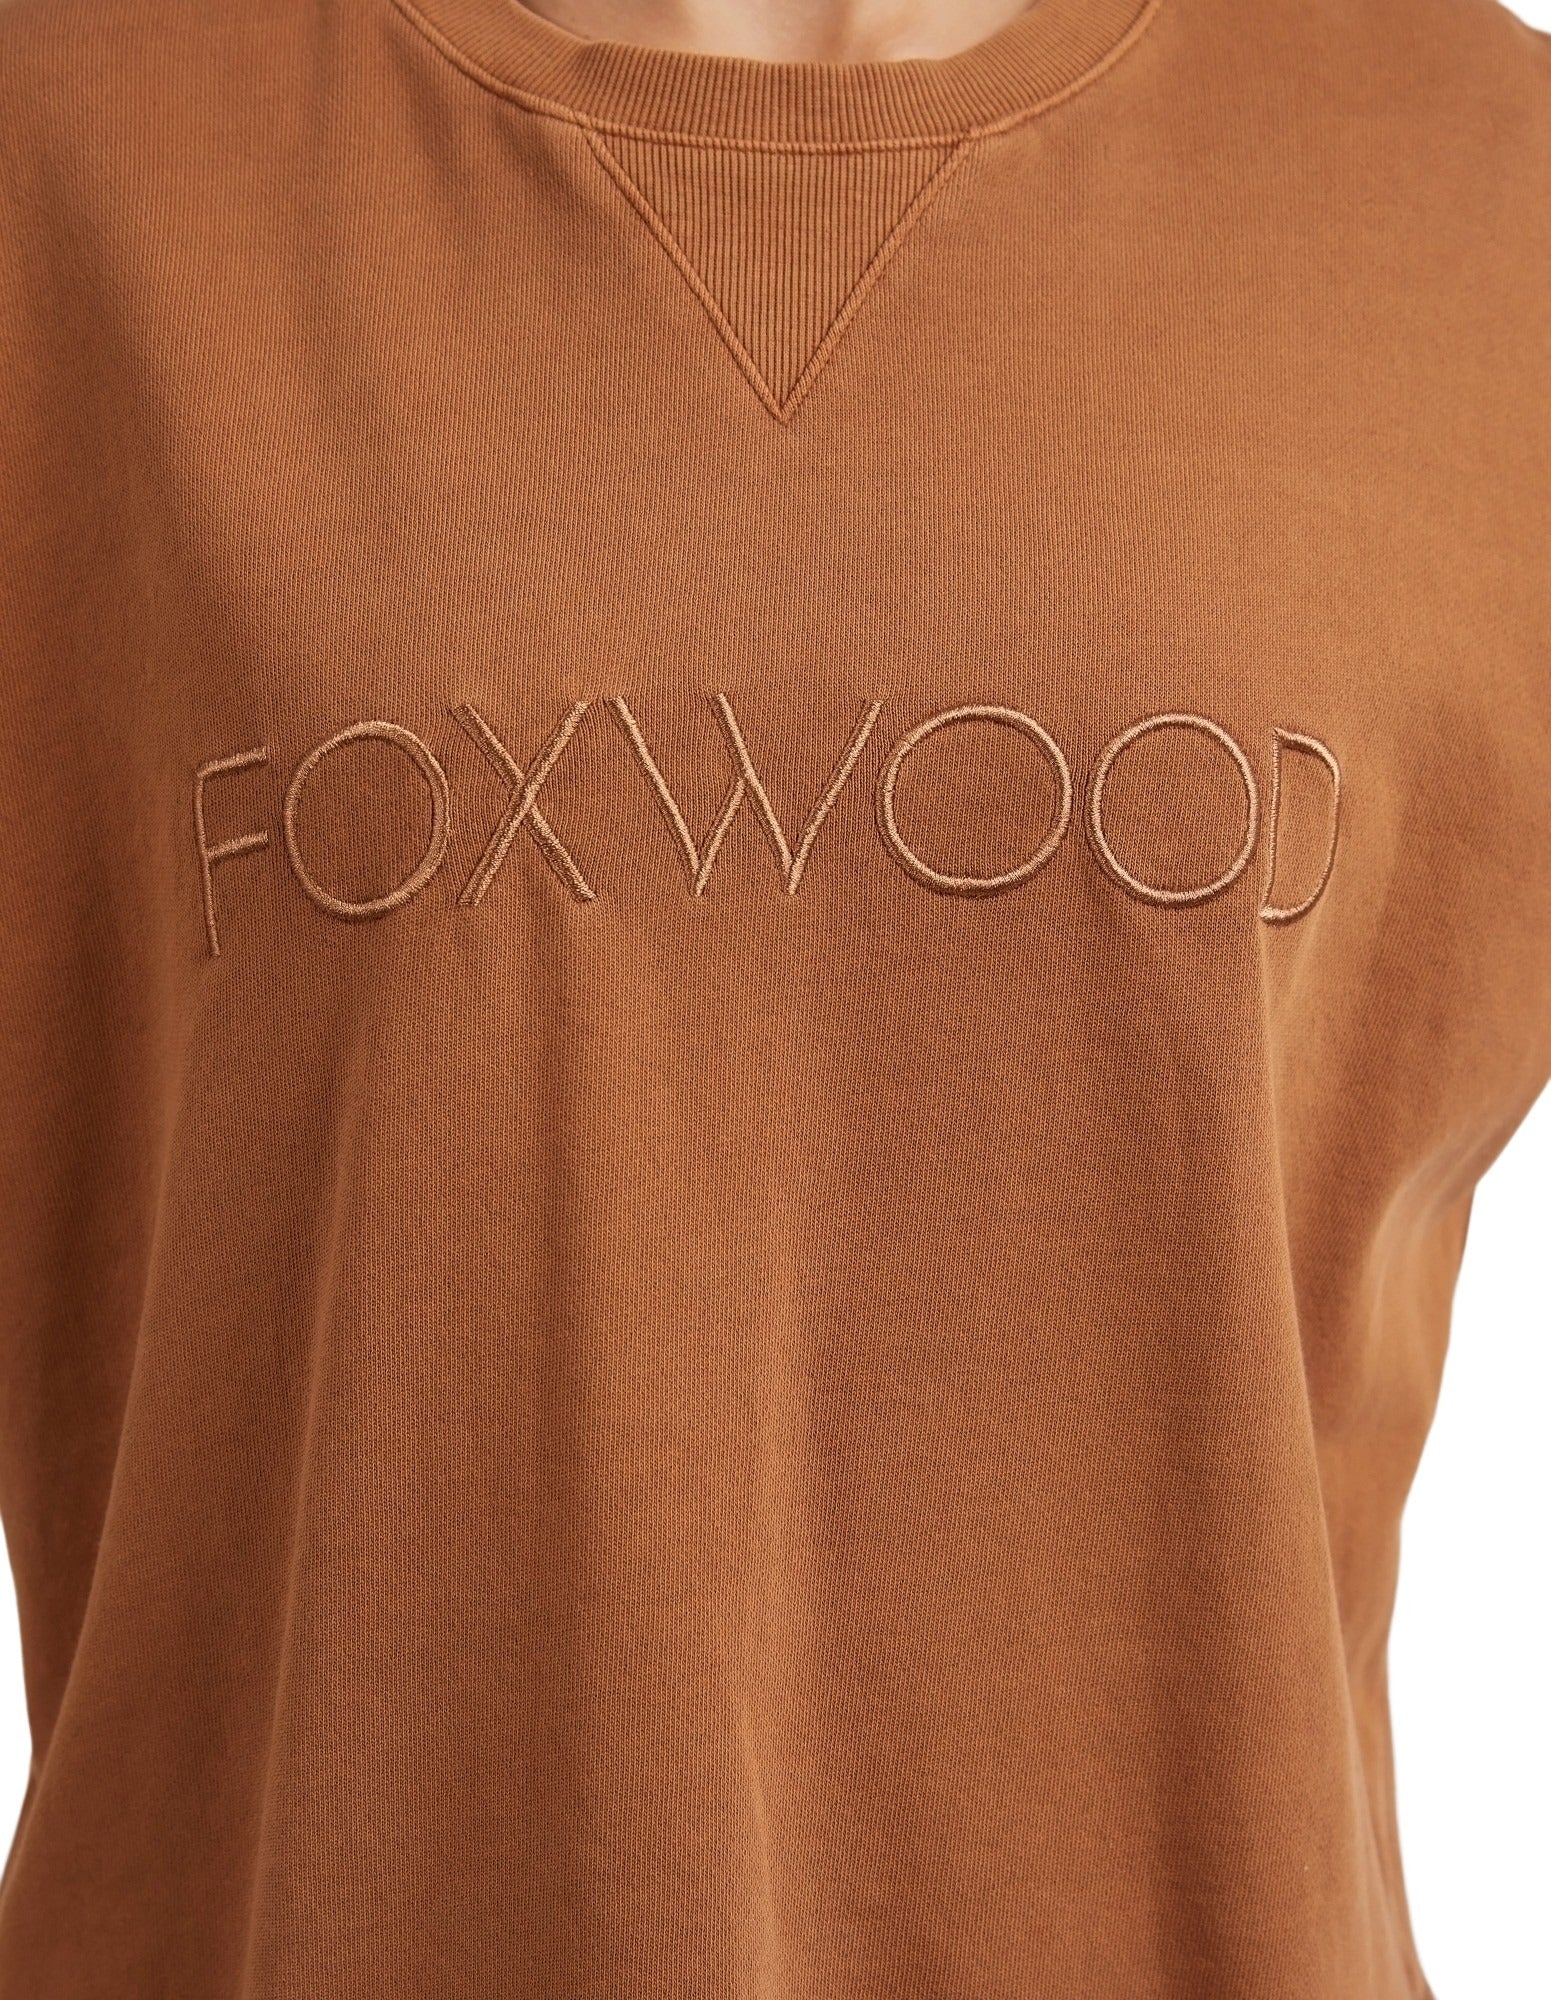 Foxwood Simplified Crew - Tan